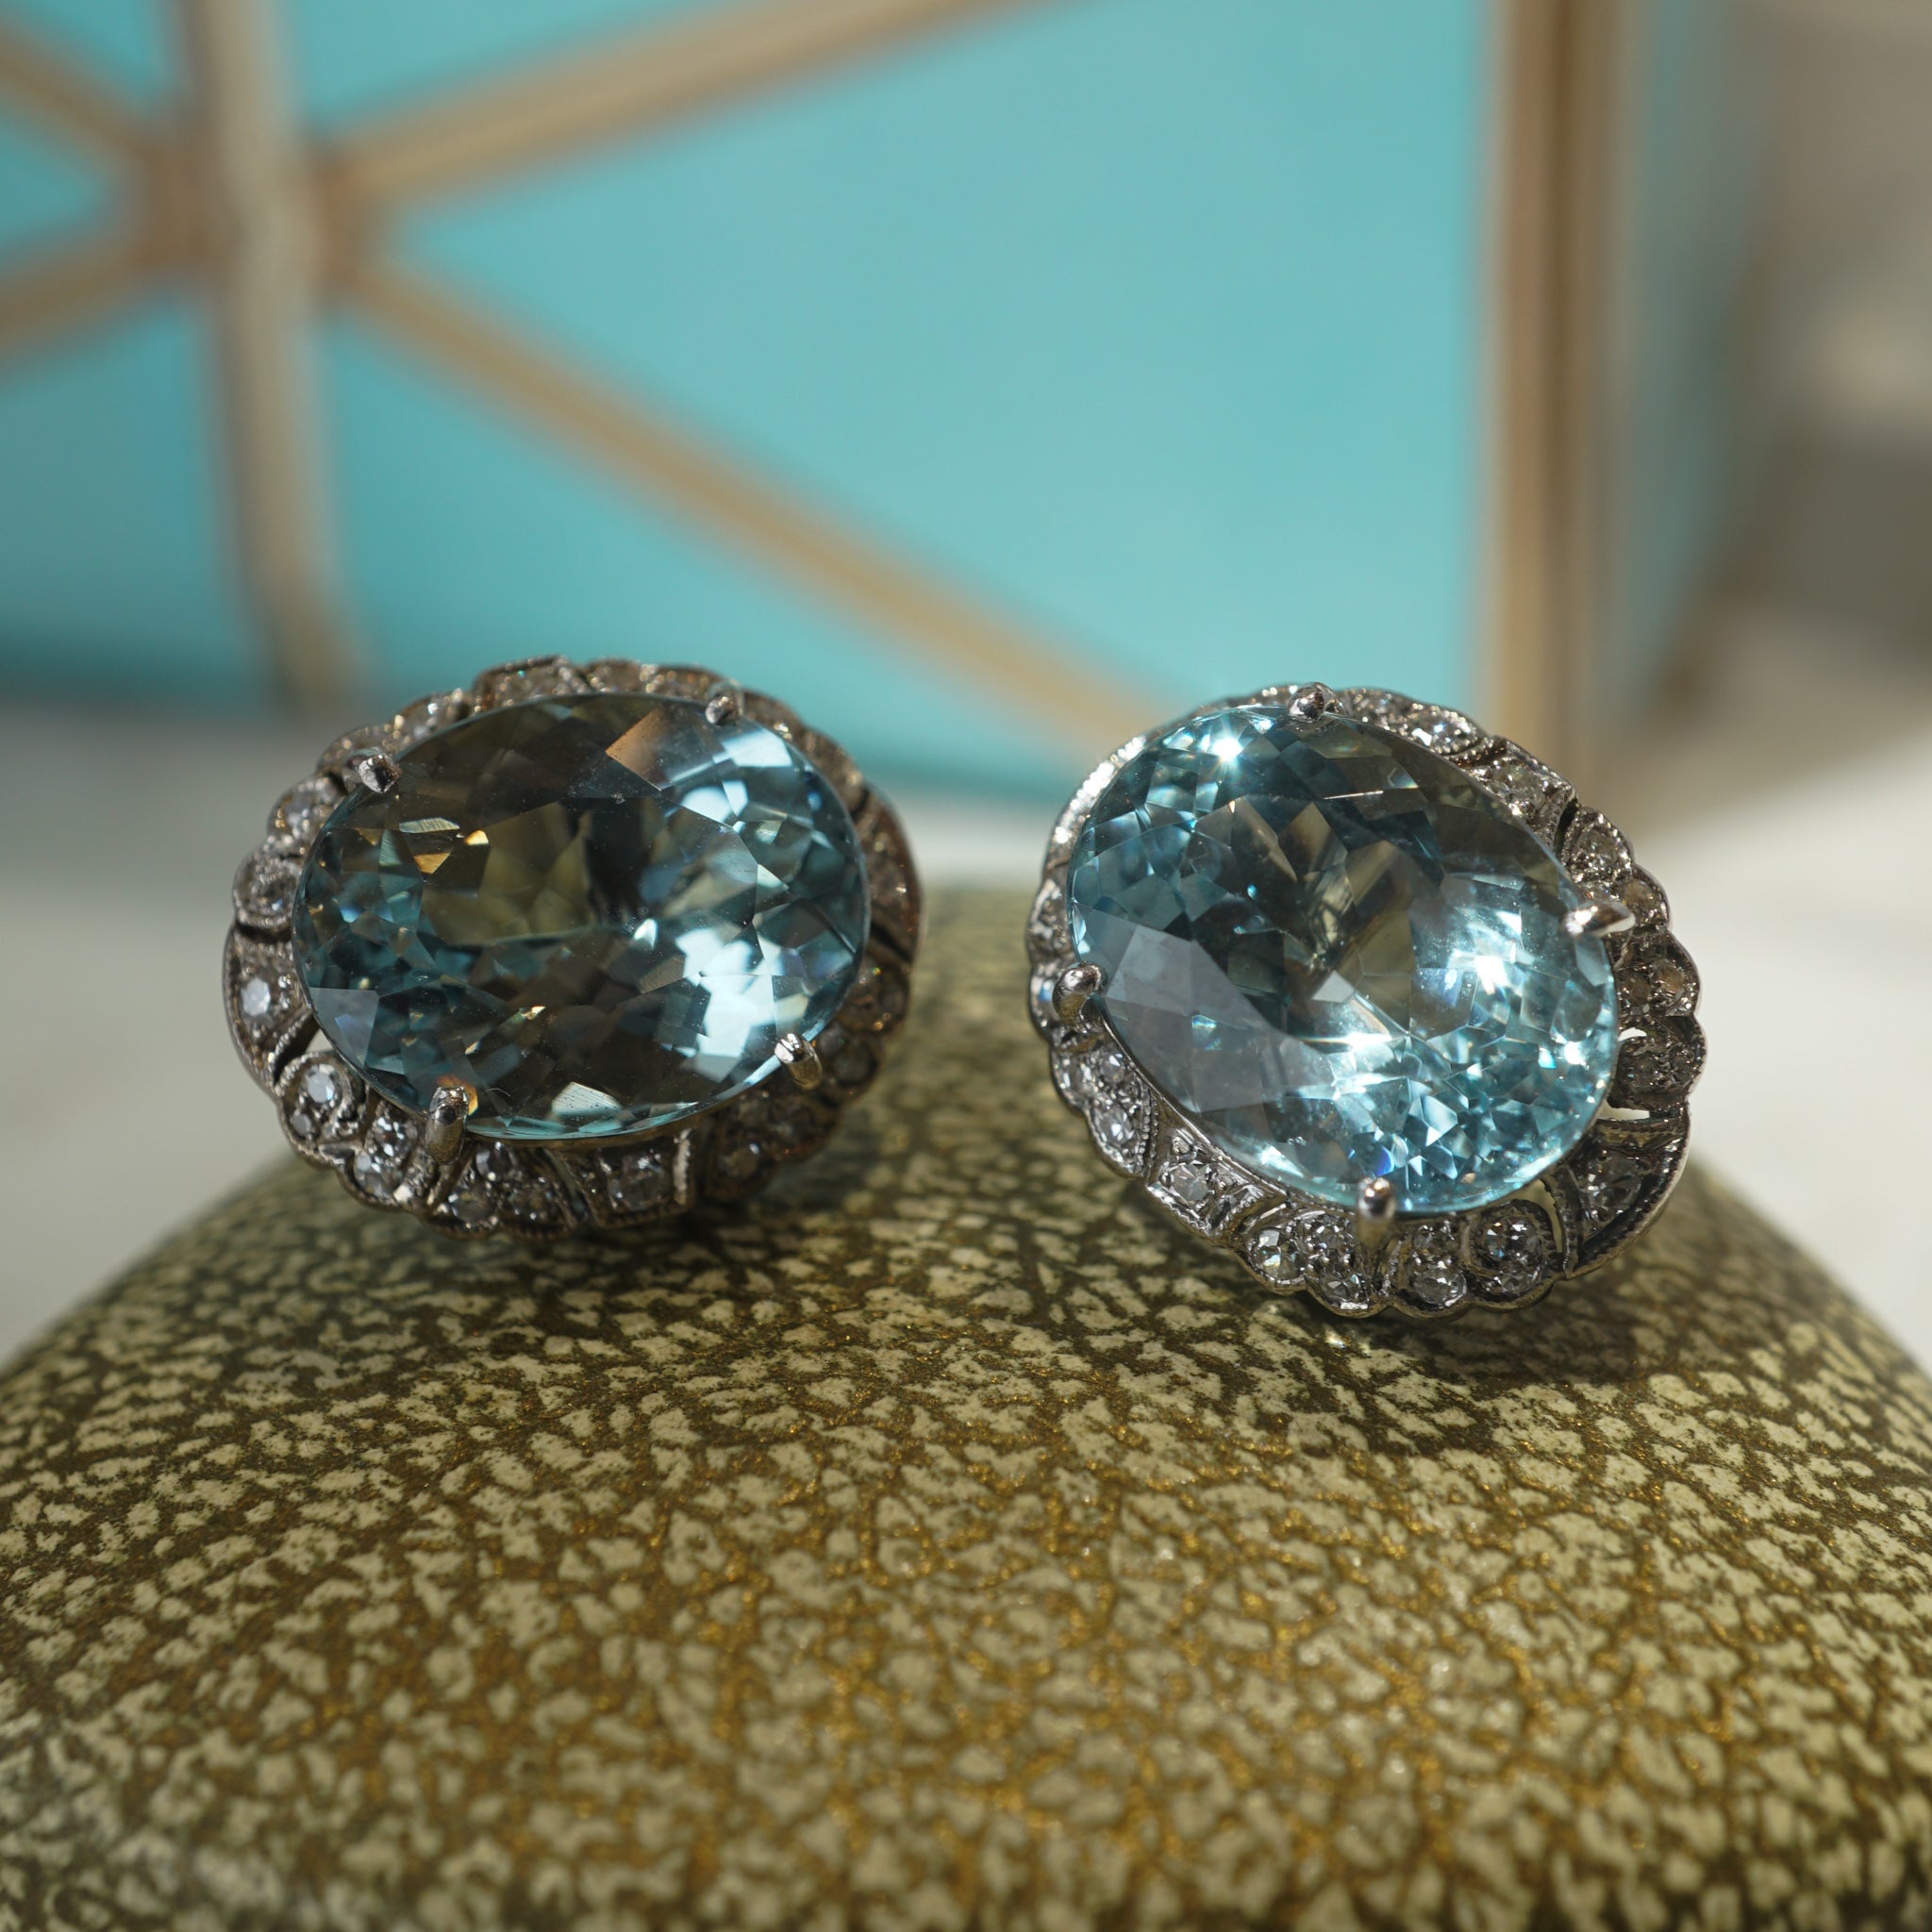 Round Aquamarine Gemstone Earrings in 14k white gold (GE-1003)